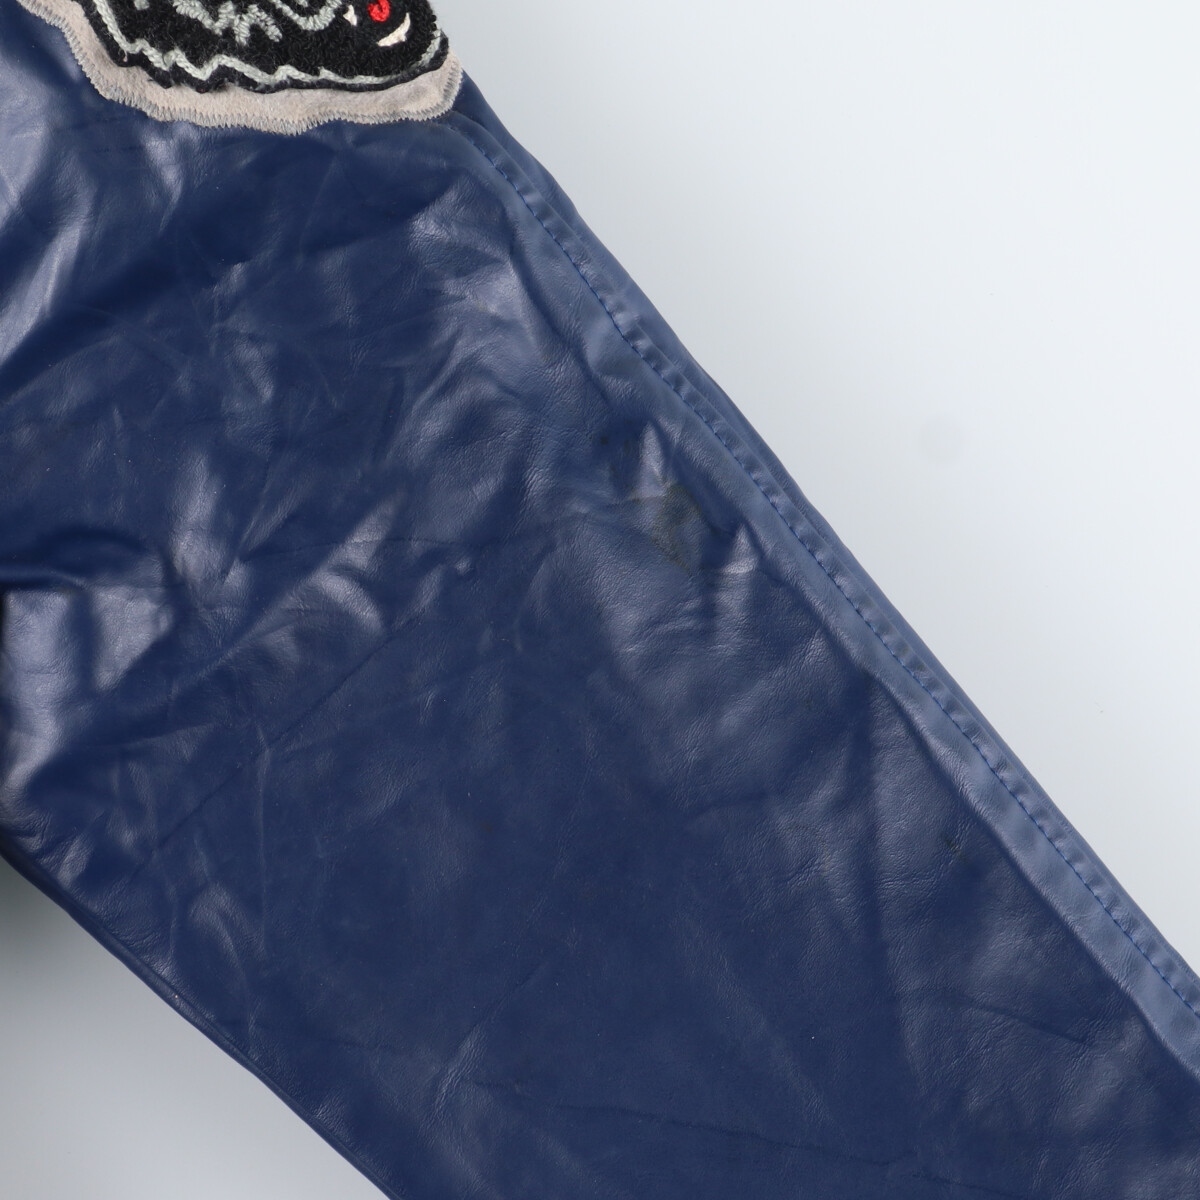  б/у одежда 90 годы Matt*s Jackets рукав кожа шерсть куртка Award жакет балка City жакет USA производства мужской M /eaa386278 [SS2403]